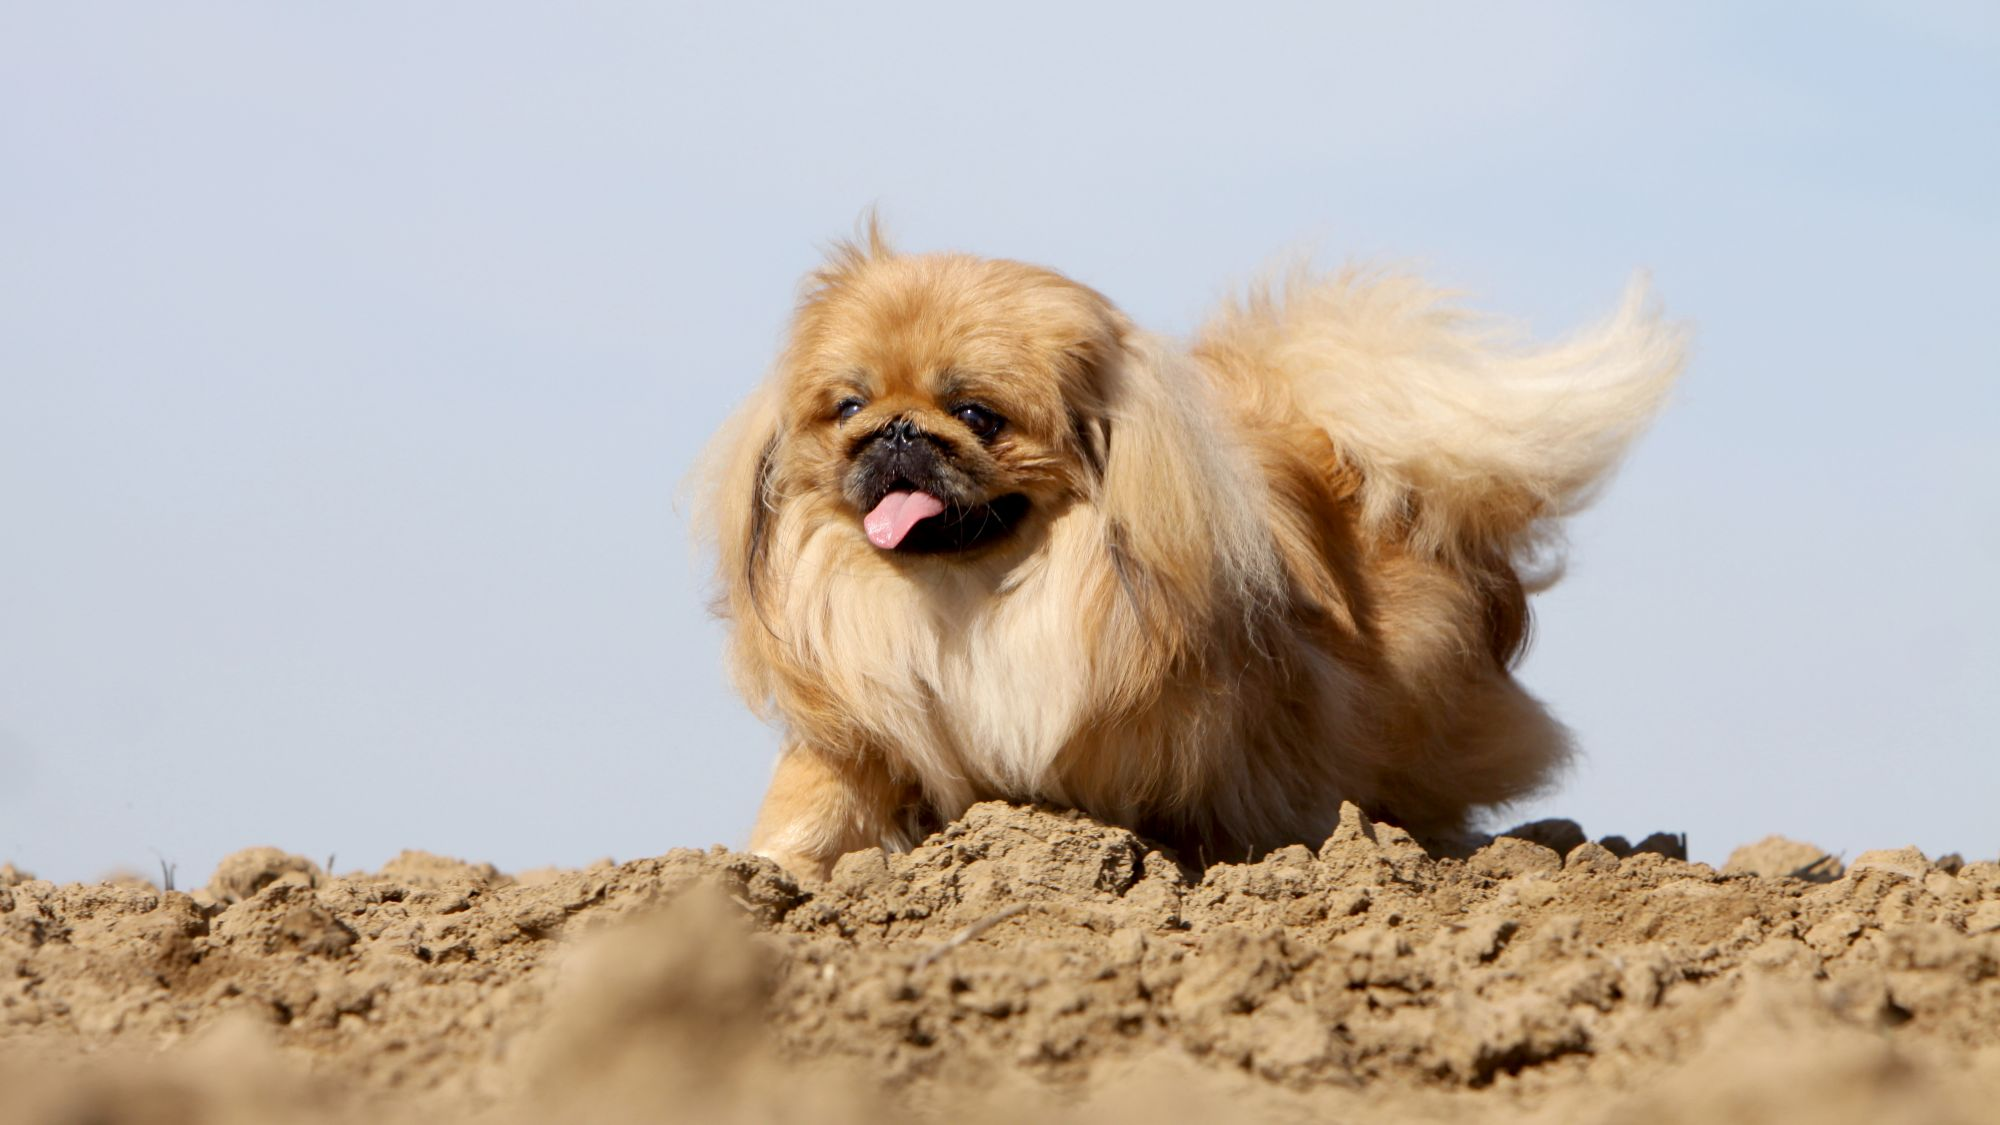 Pekinese dog walking over a dried dirt mound